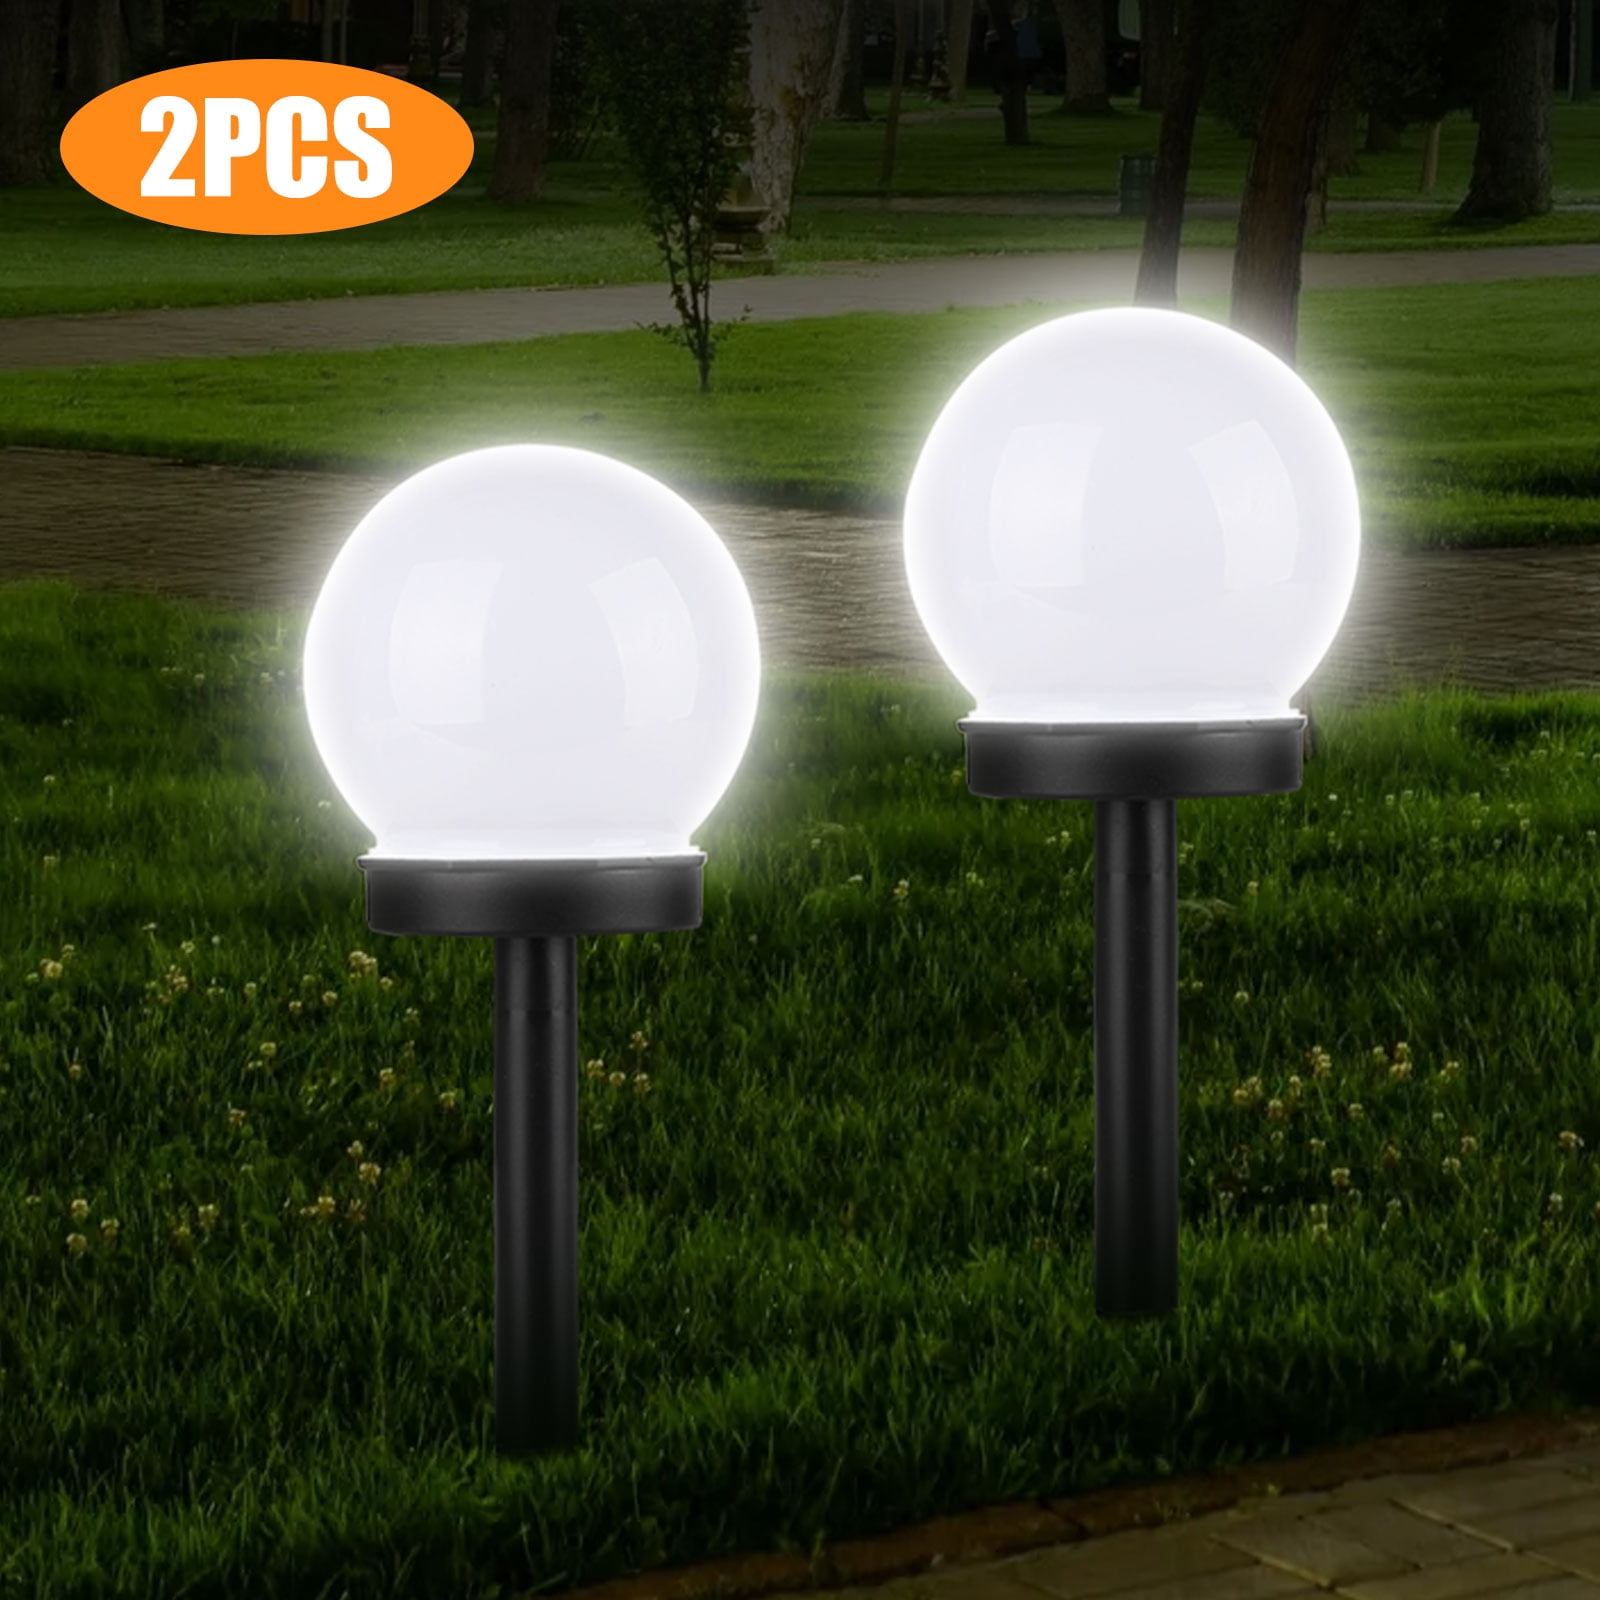 2PCS Solar Power LED Light Waterproof Outdoor Garden Stake LED Landscape Lamp 